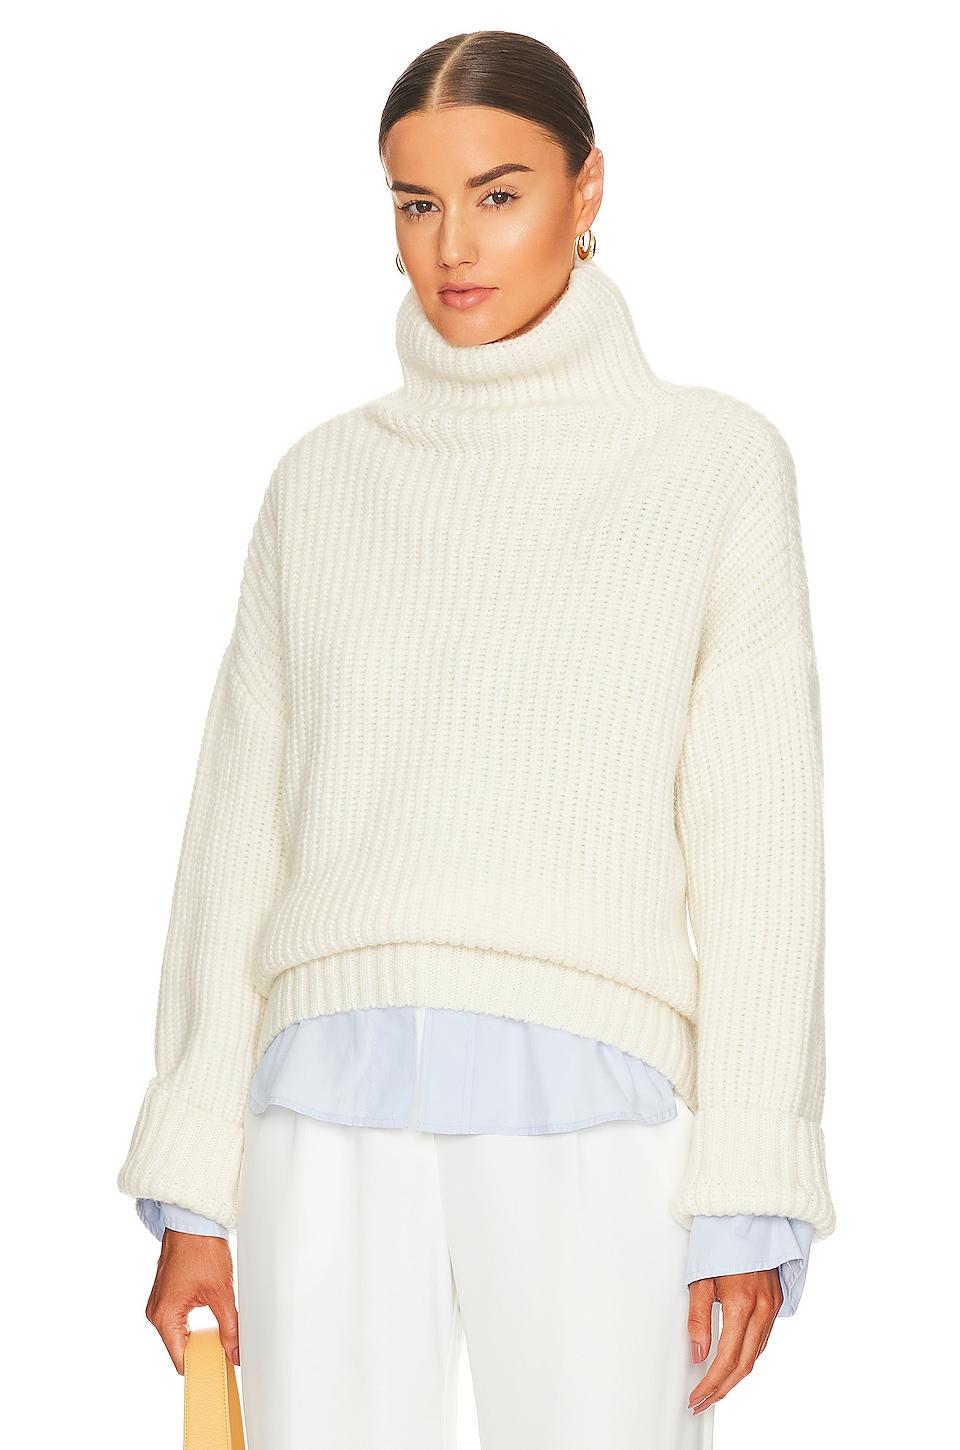 ANINE BING Sydney Sweater in Cream | REVOLVE